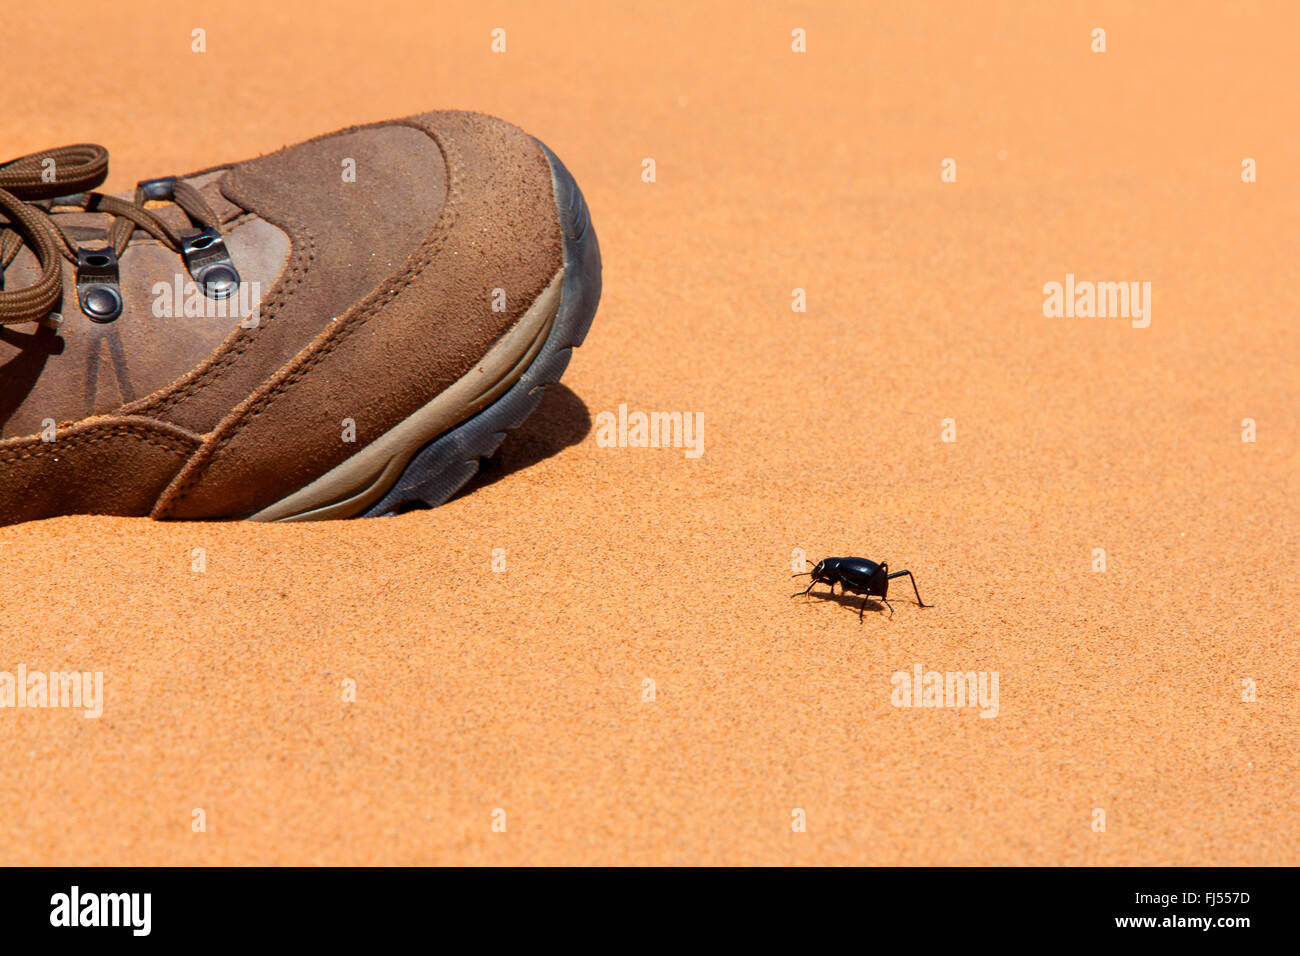 darkling beetles, flour beetles, mealworm beetles (Tenebrionidae), beetle on desert sand next to hiking boot, Namibia, Dorob National Park, Swakopmund Stock Photo